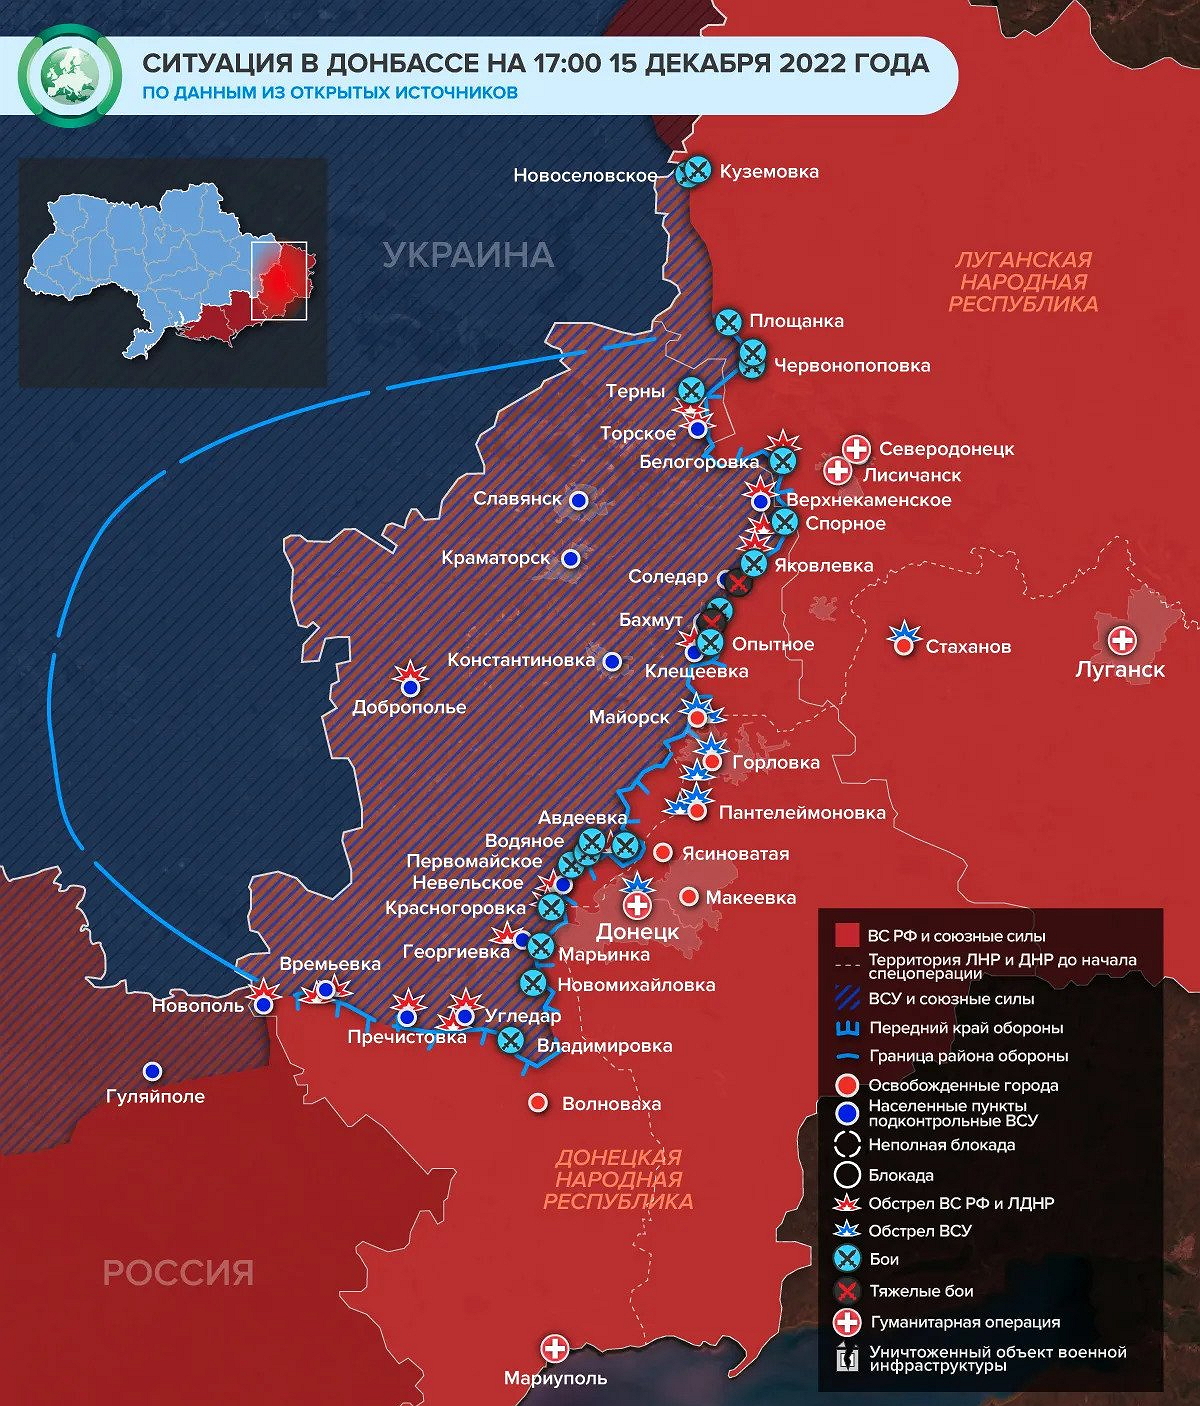 Newsweek: Киев в критический момент рискует остаться без помощи НАТО   (ВИДЕО)